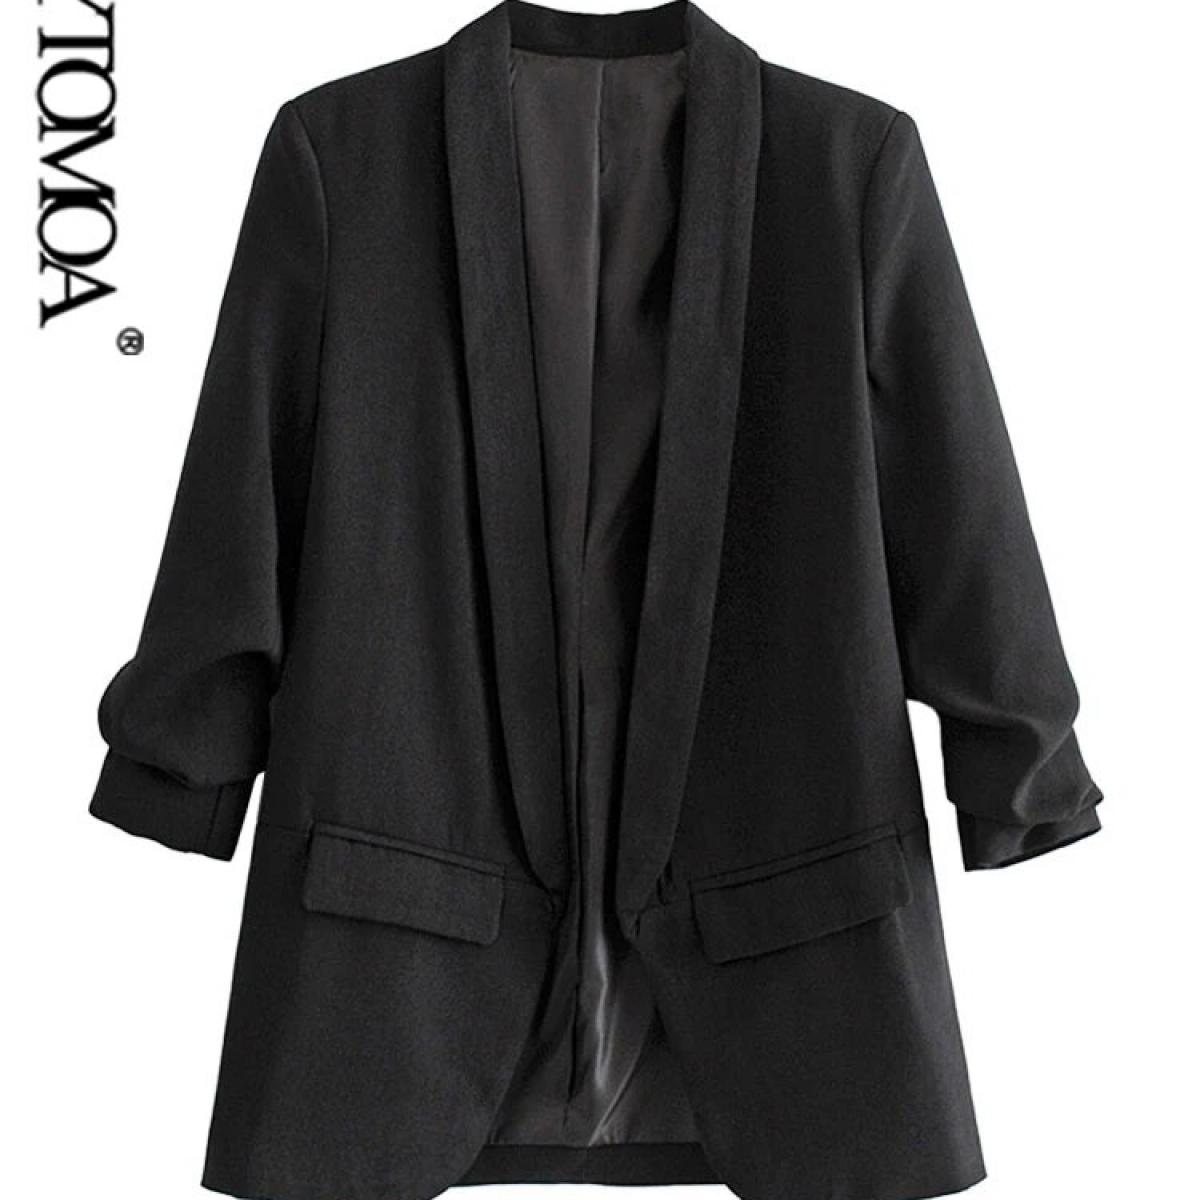 Kpytomoa Women Fashion With Pleated Sleeves Open Blazer Coat Vintage Long Sleeve Flap Pockets Female Outerwear Chic Vest